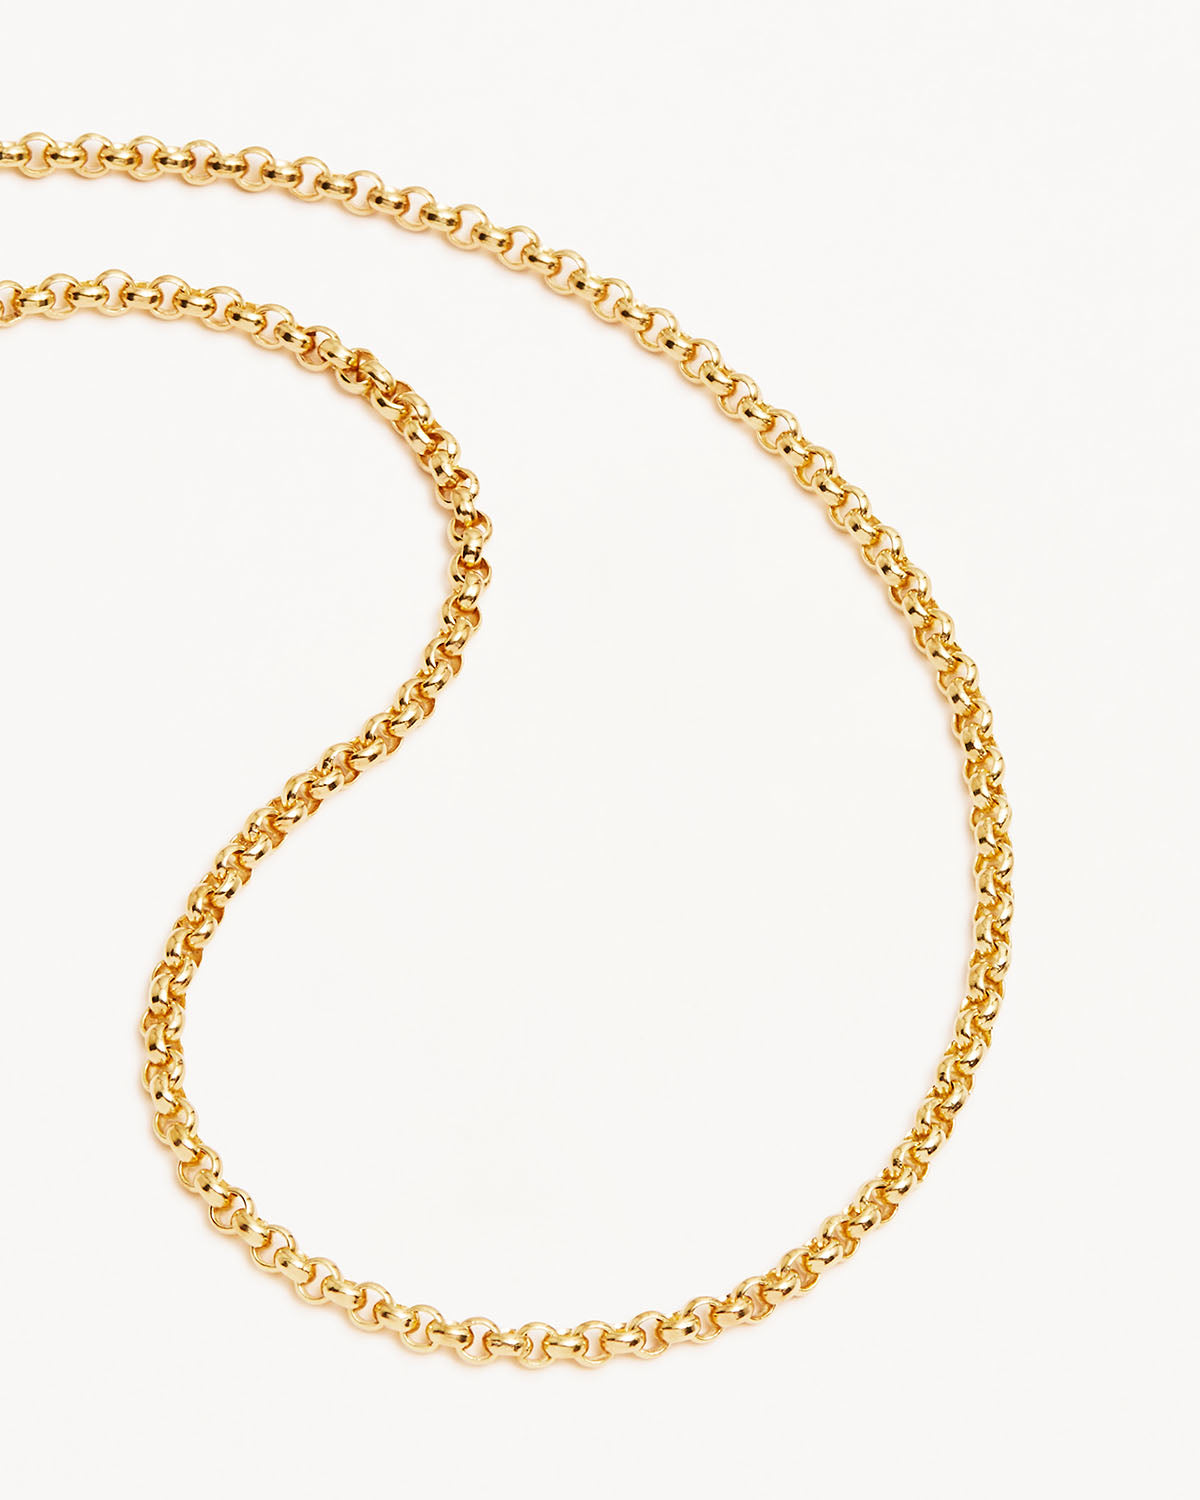 10mm Gold Belcher Chain - Smooth Elegance That Endures